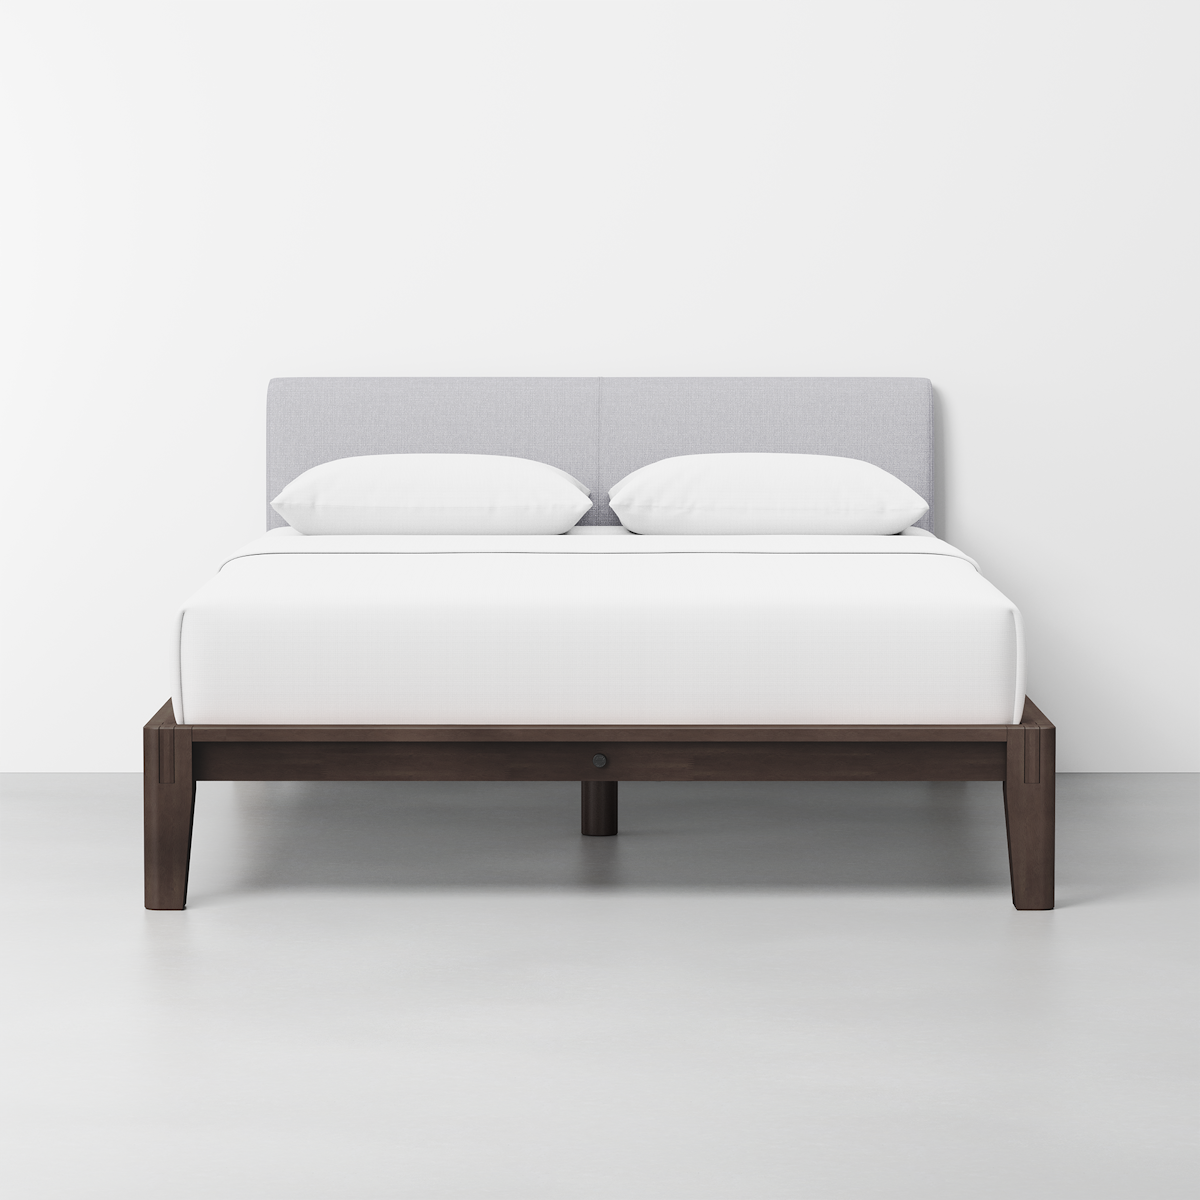 The Bed (Espresso / Fog Grey) - Render - Front